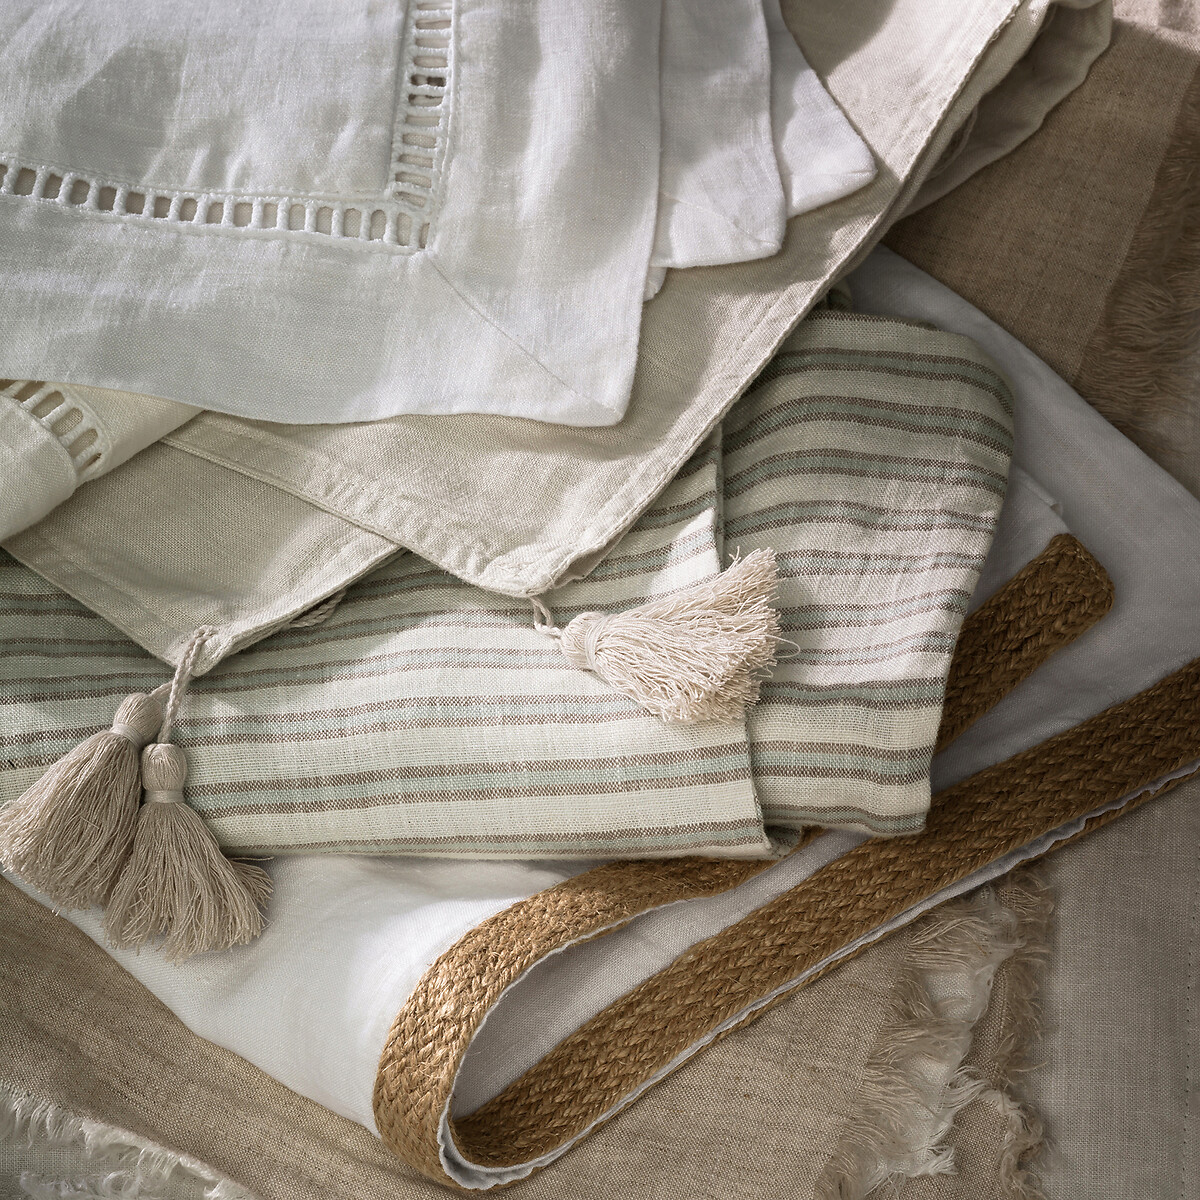 Celini Textured Linen 300 Thread Count Pillowcase